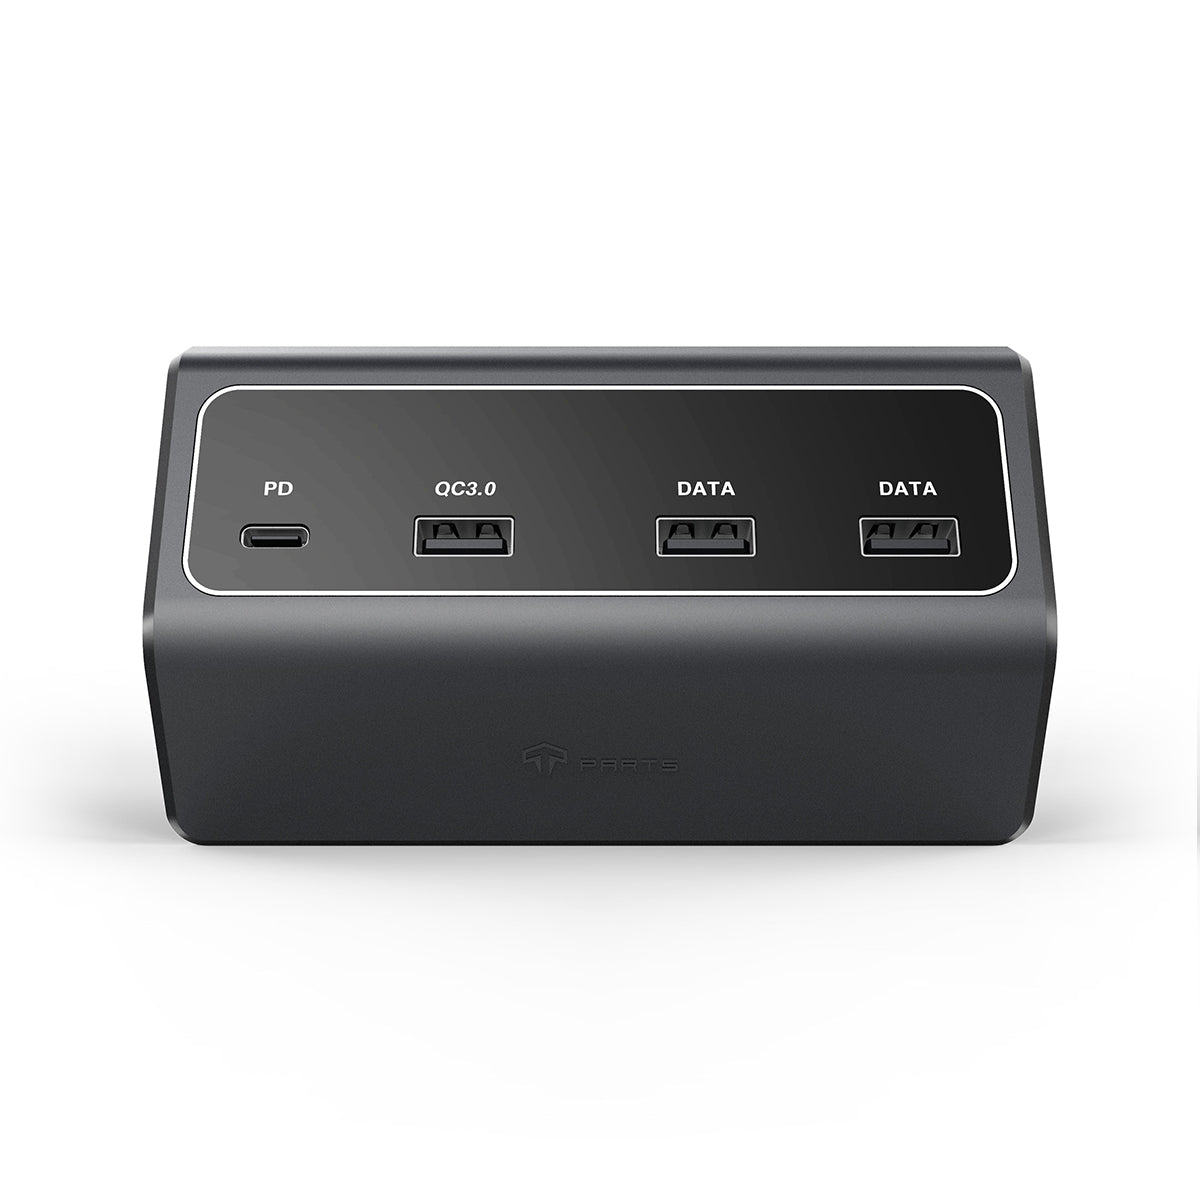 Tesla Model 3/Y USB Hub – AutoCarPartsUK